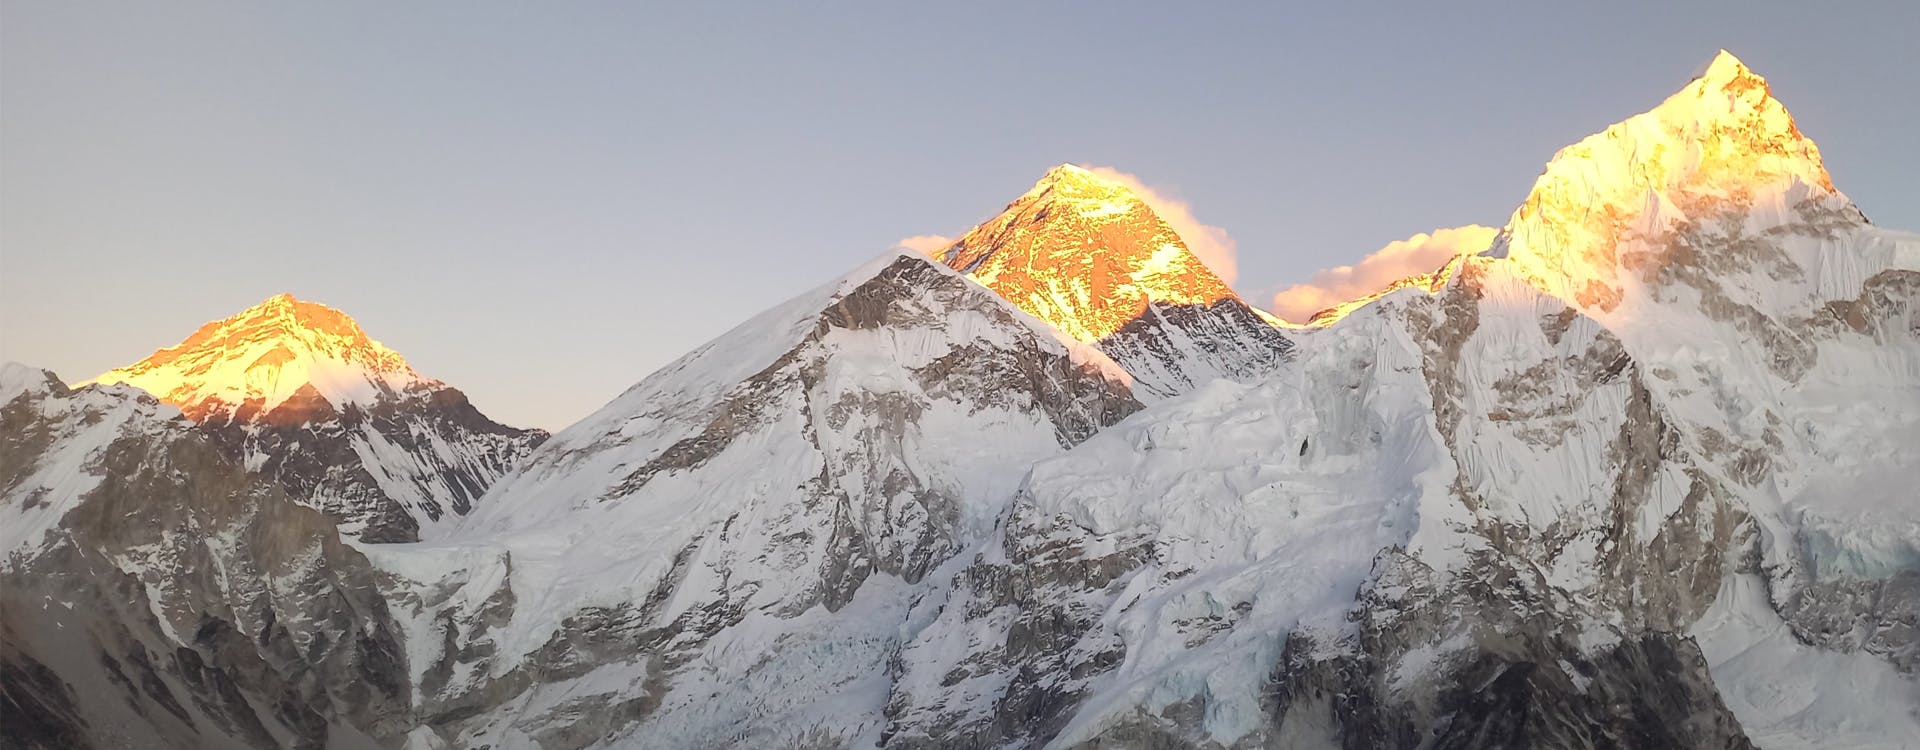 Everest base Camp trek in december